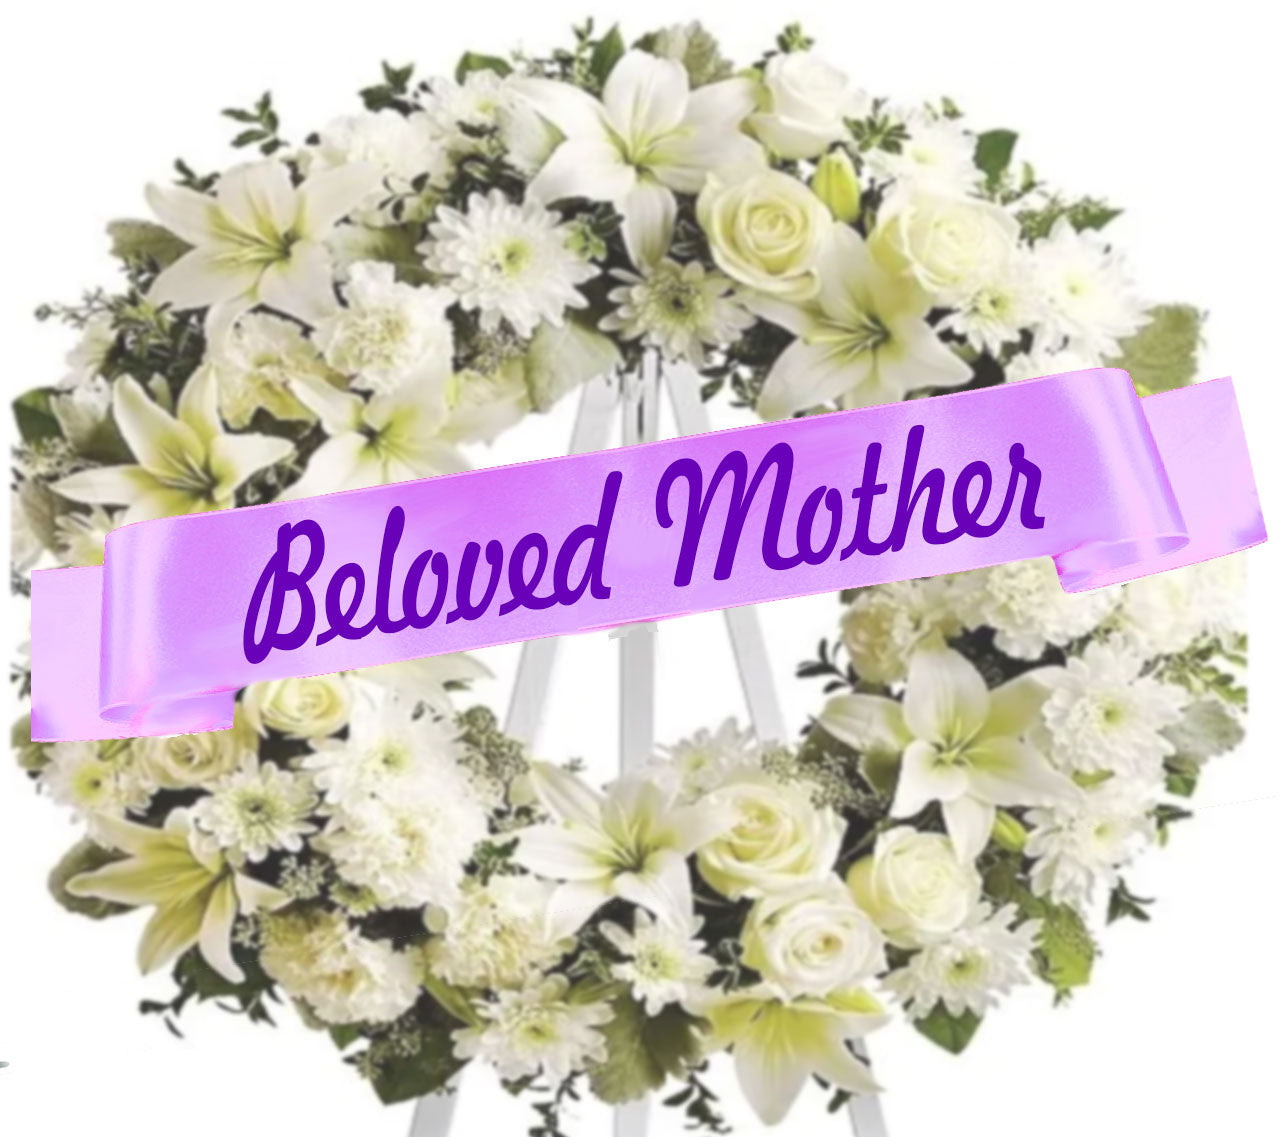 Beloved Mother Funeral Flowers Ribbon Banner.